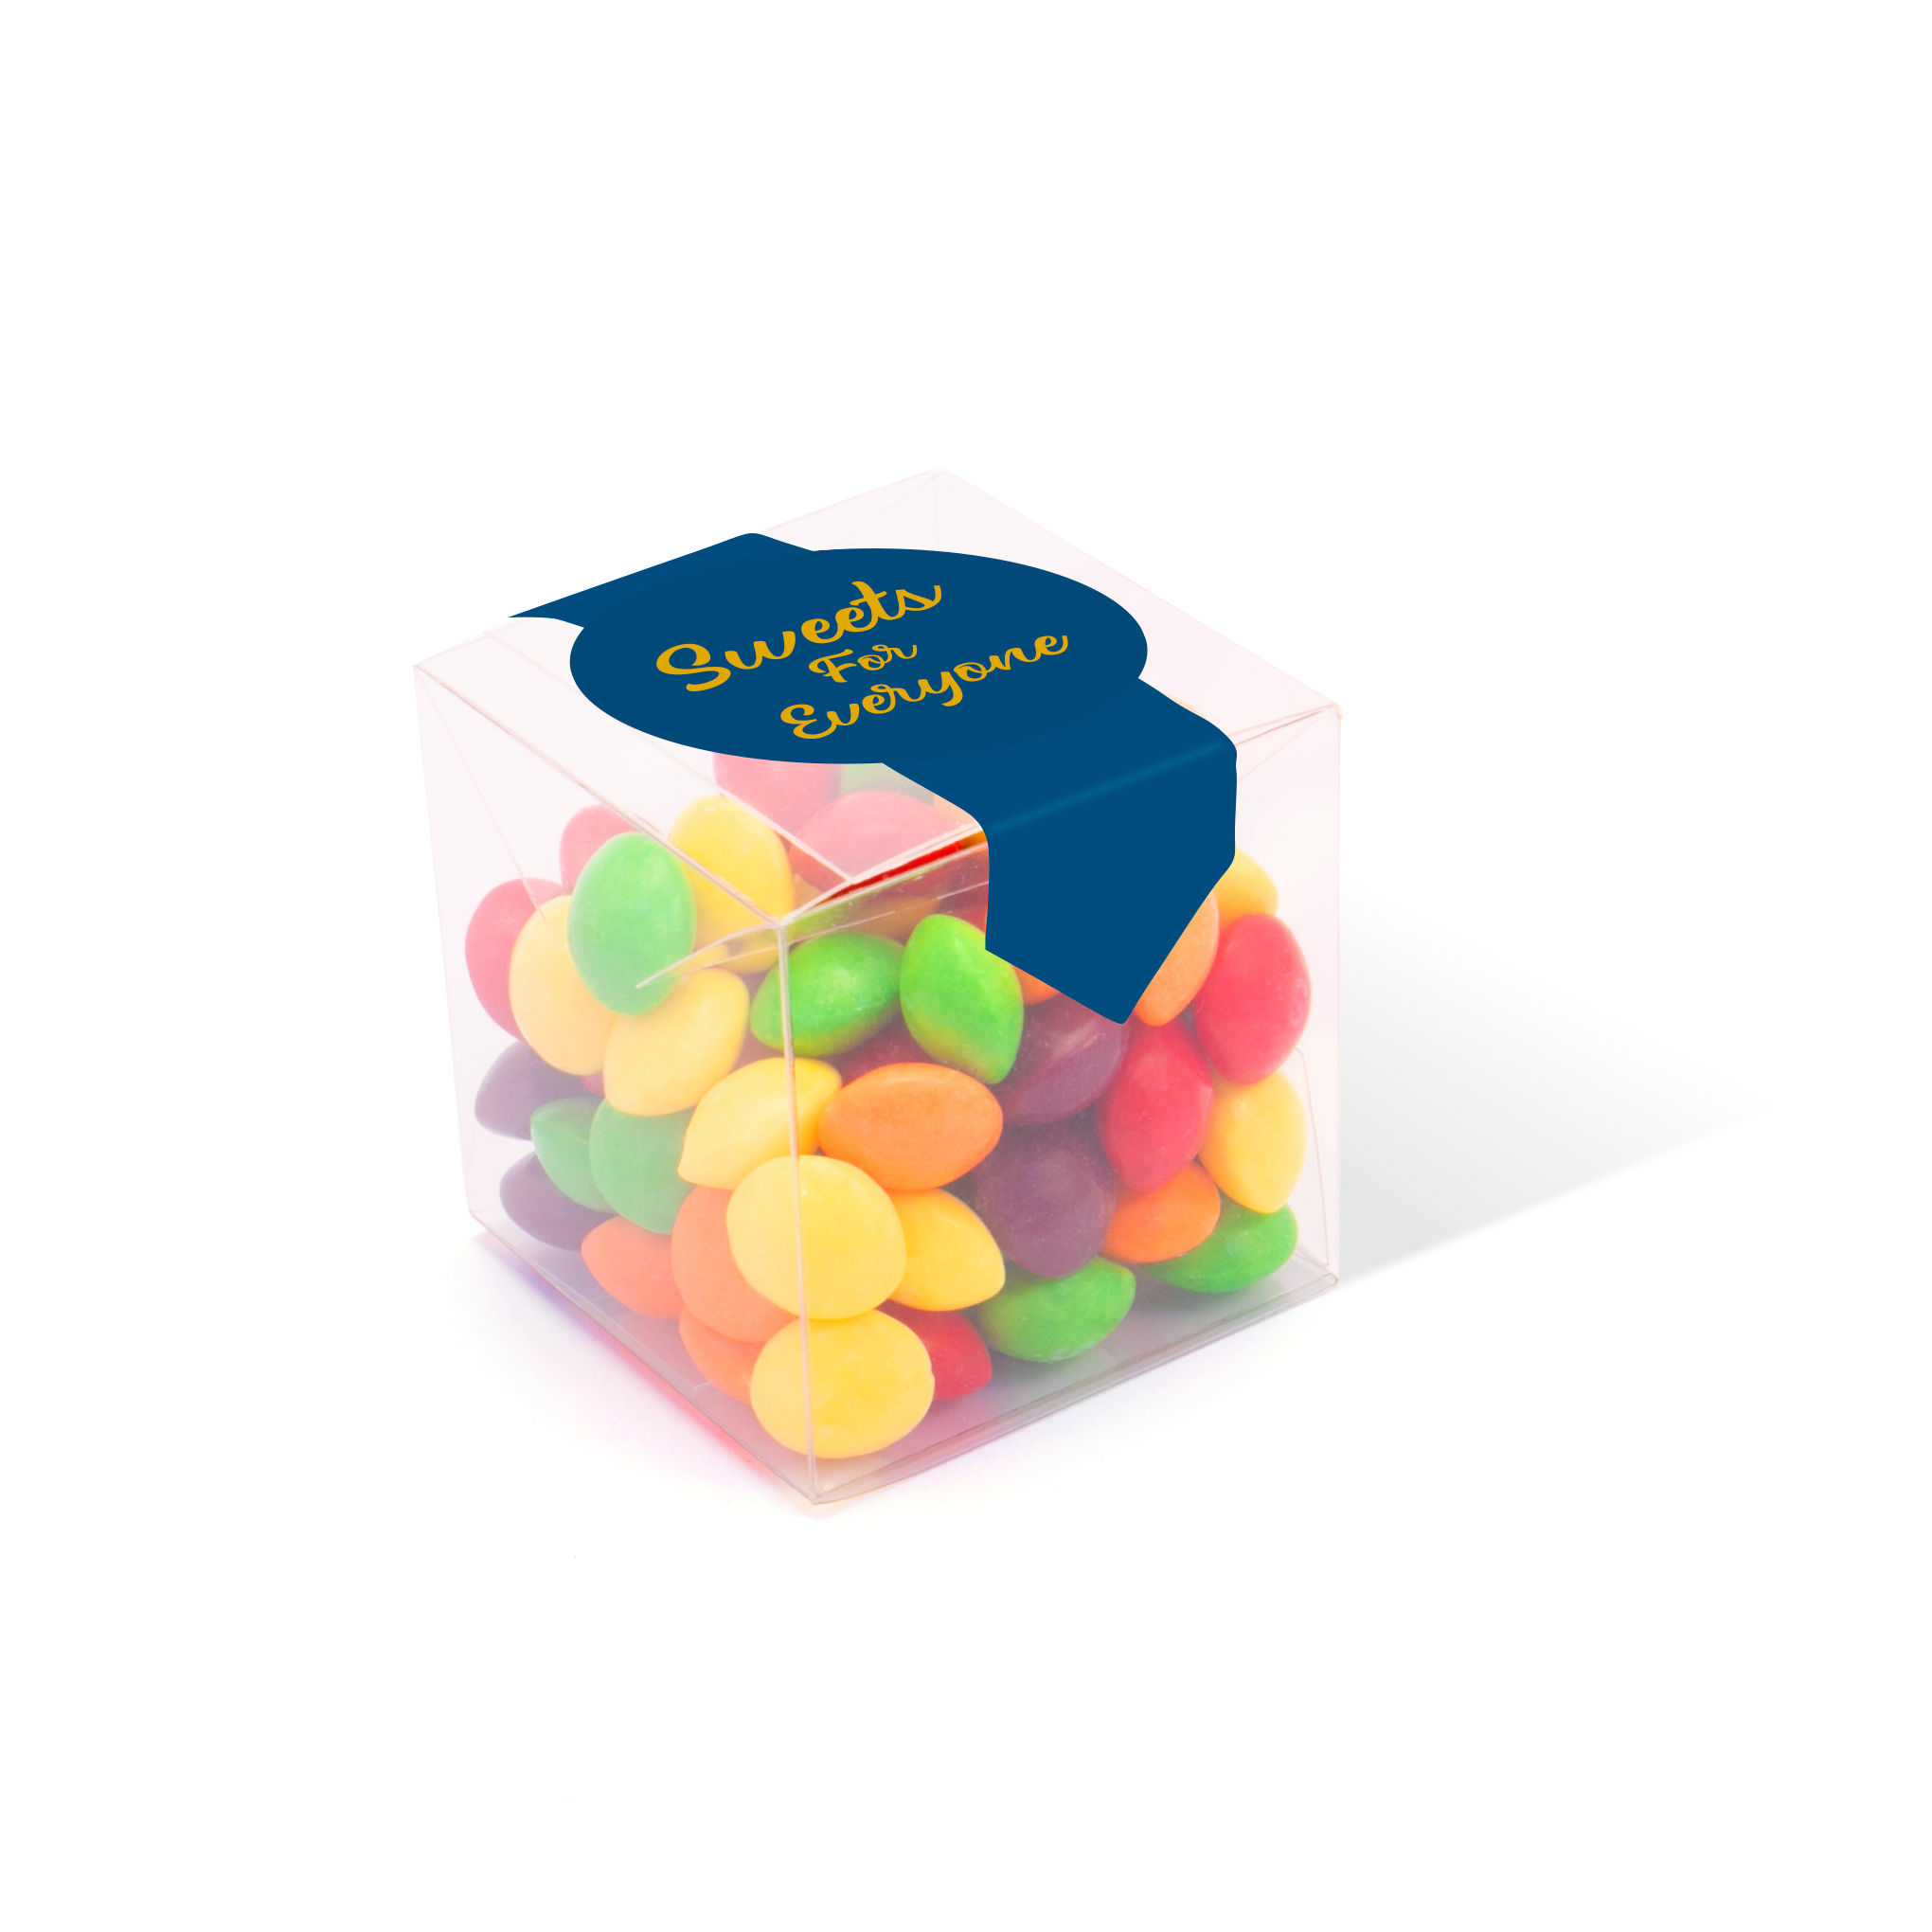 Clear Cube - Skittles®